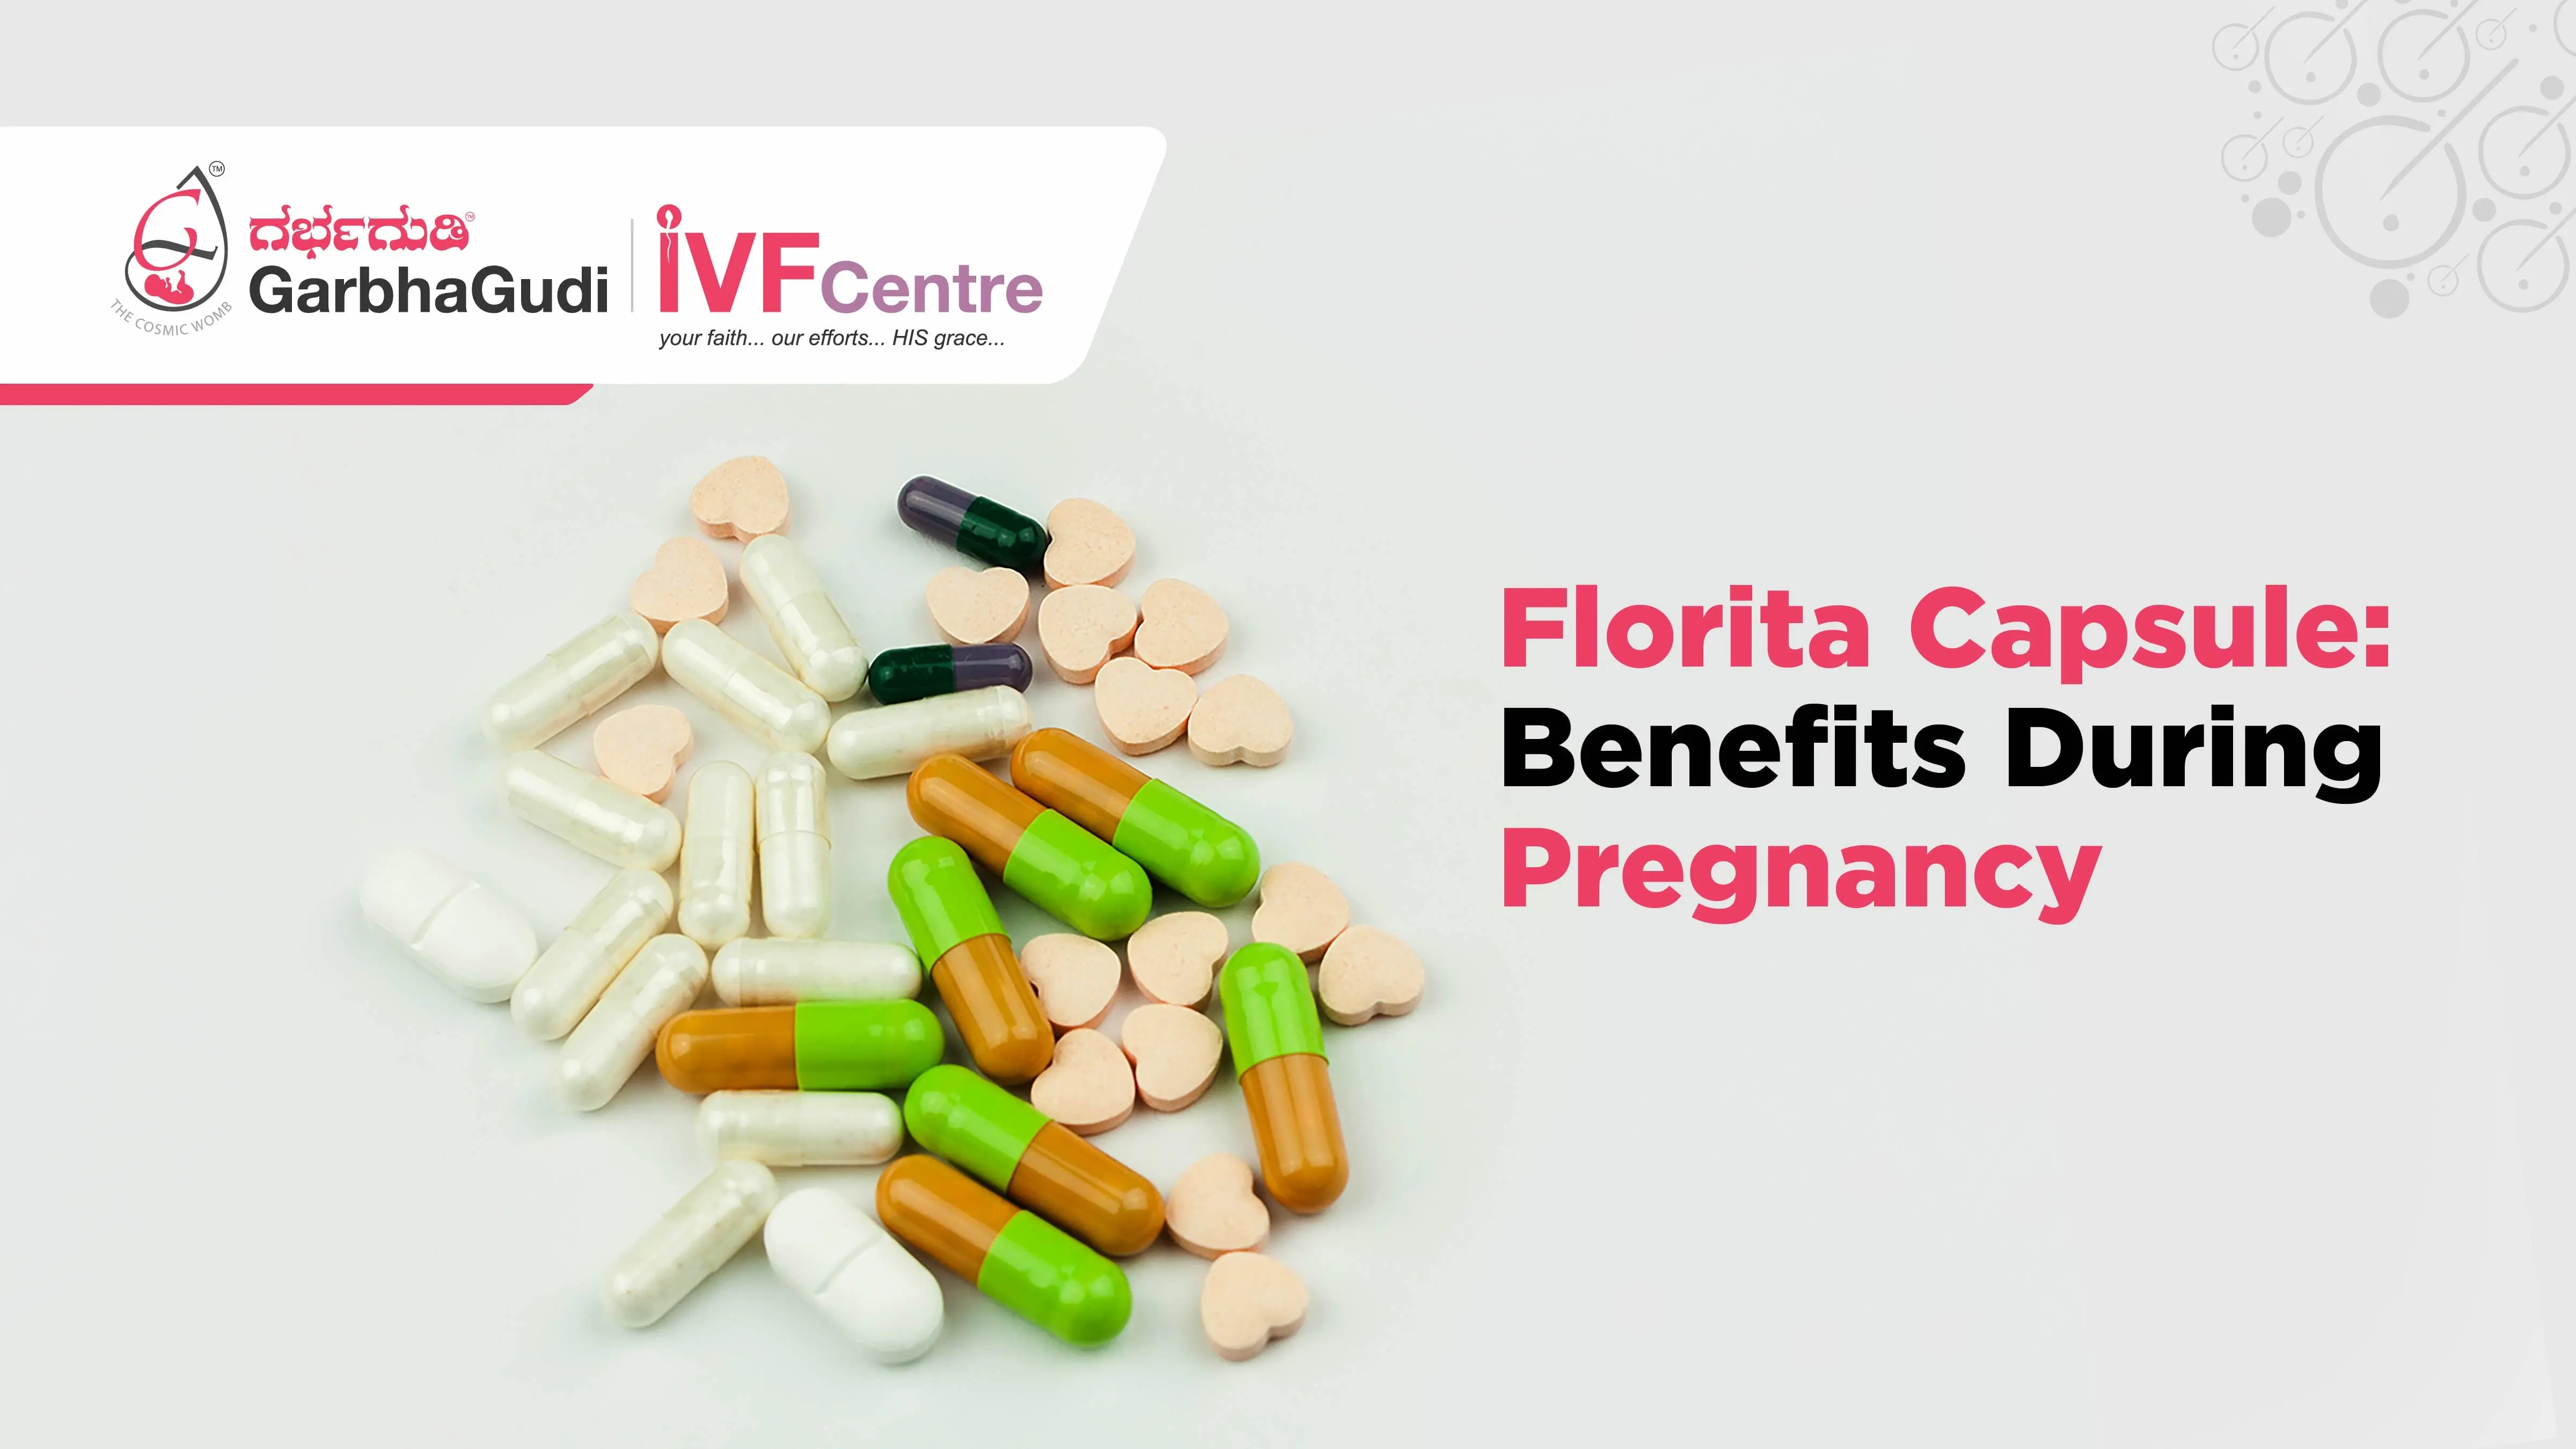 Florita Capsule: Benefits During Pregnancy